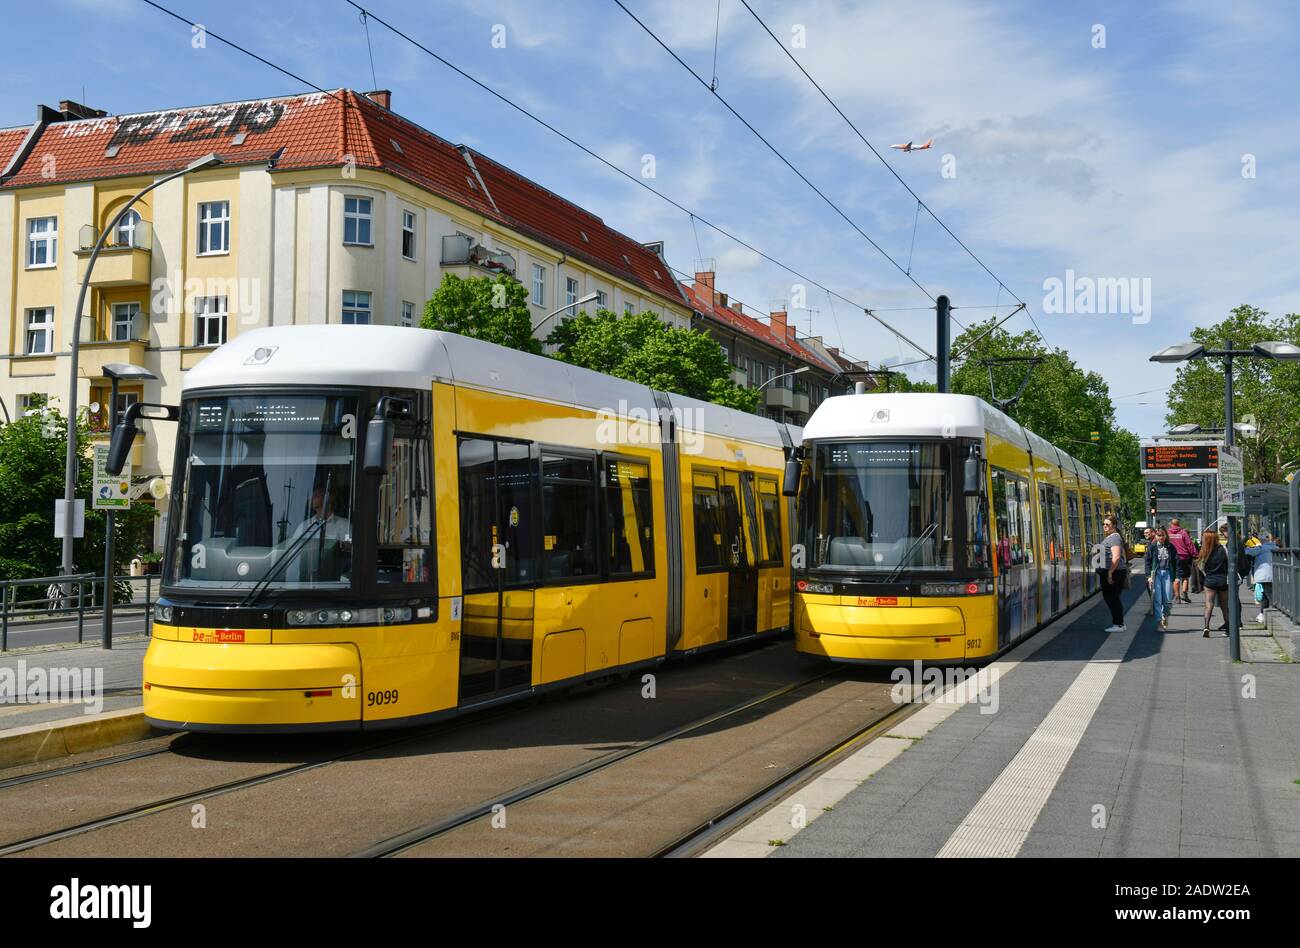 Tram, Vinetastraße, Pankow, Berlin, Deutschland Stock Photo